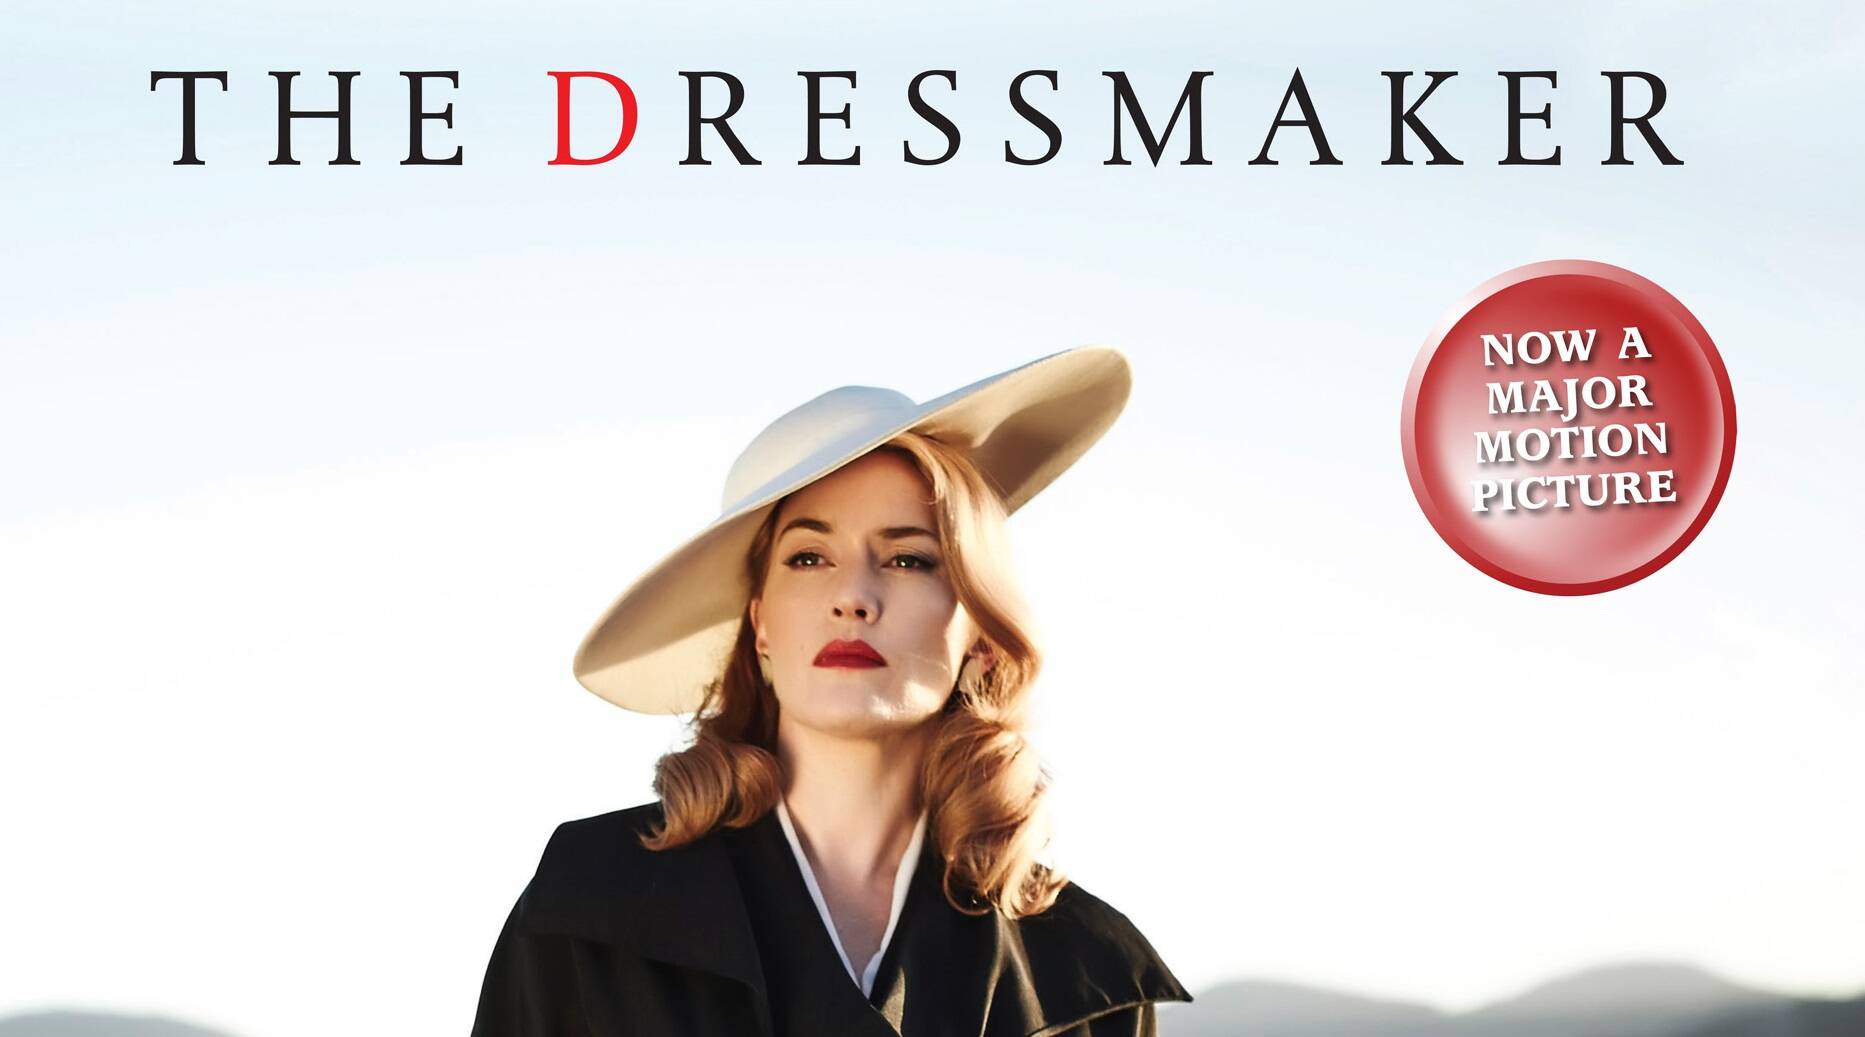 The Dressmaker (2015) Review